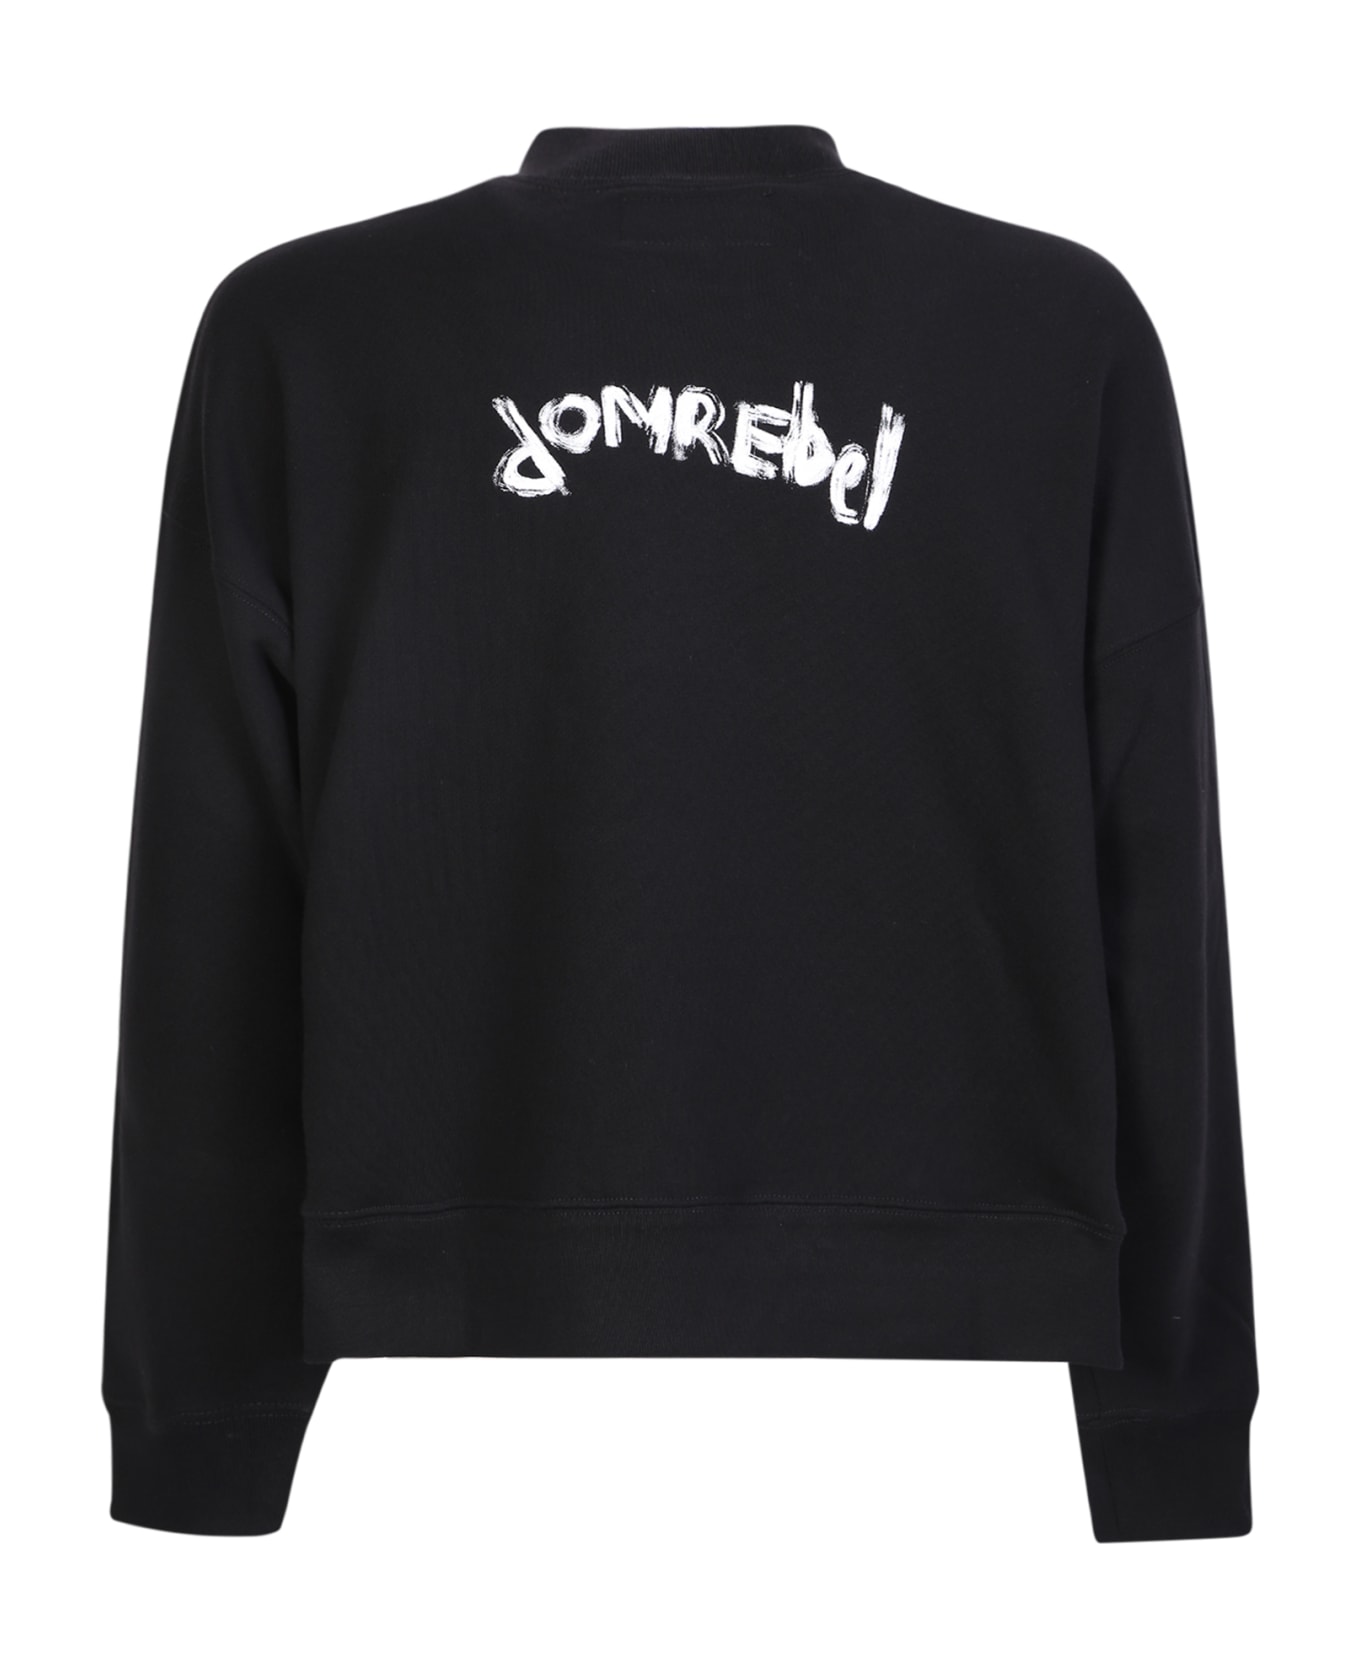 Dom Rebel Moody Sweatshirt - Black